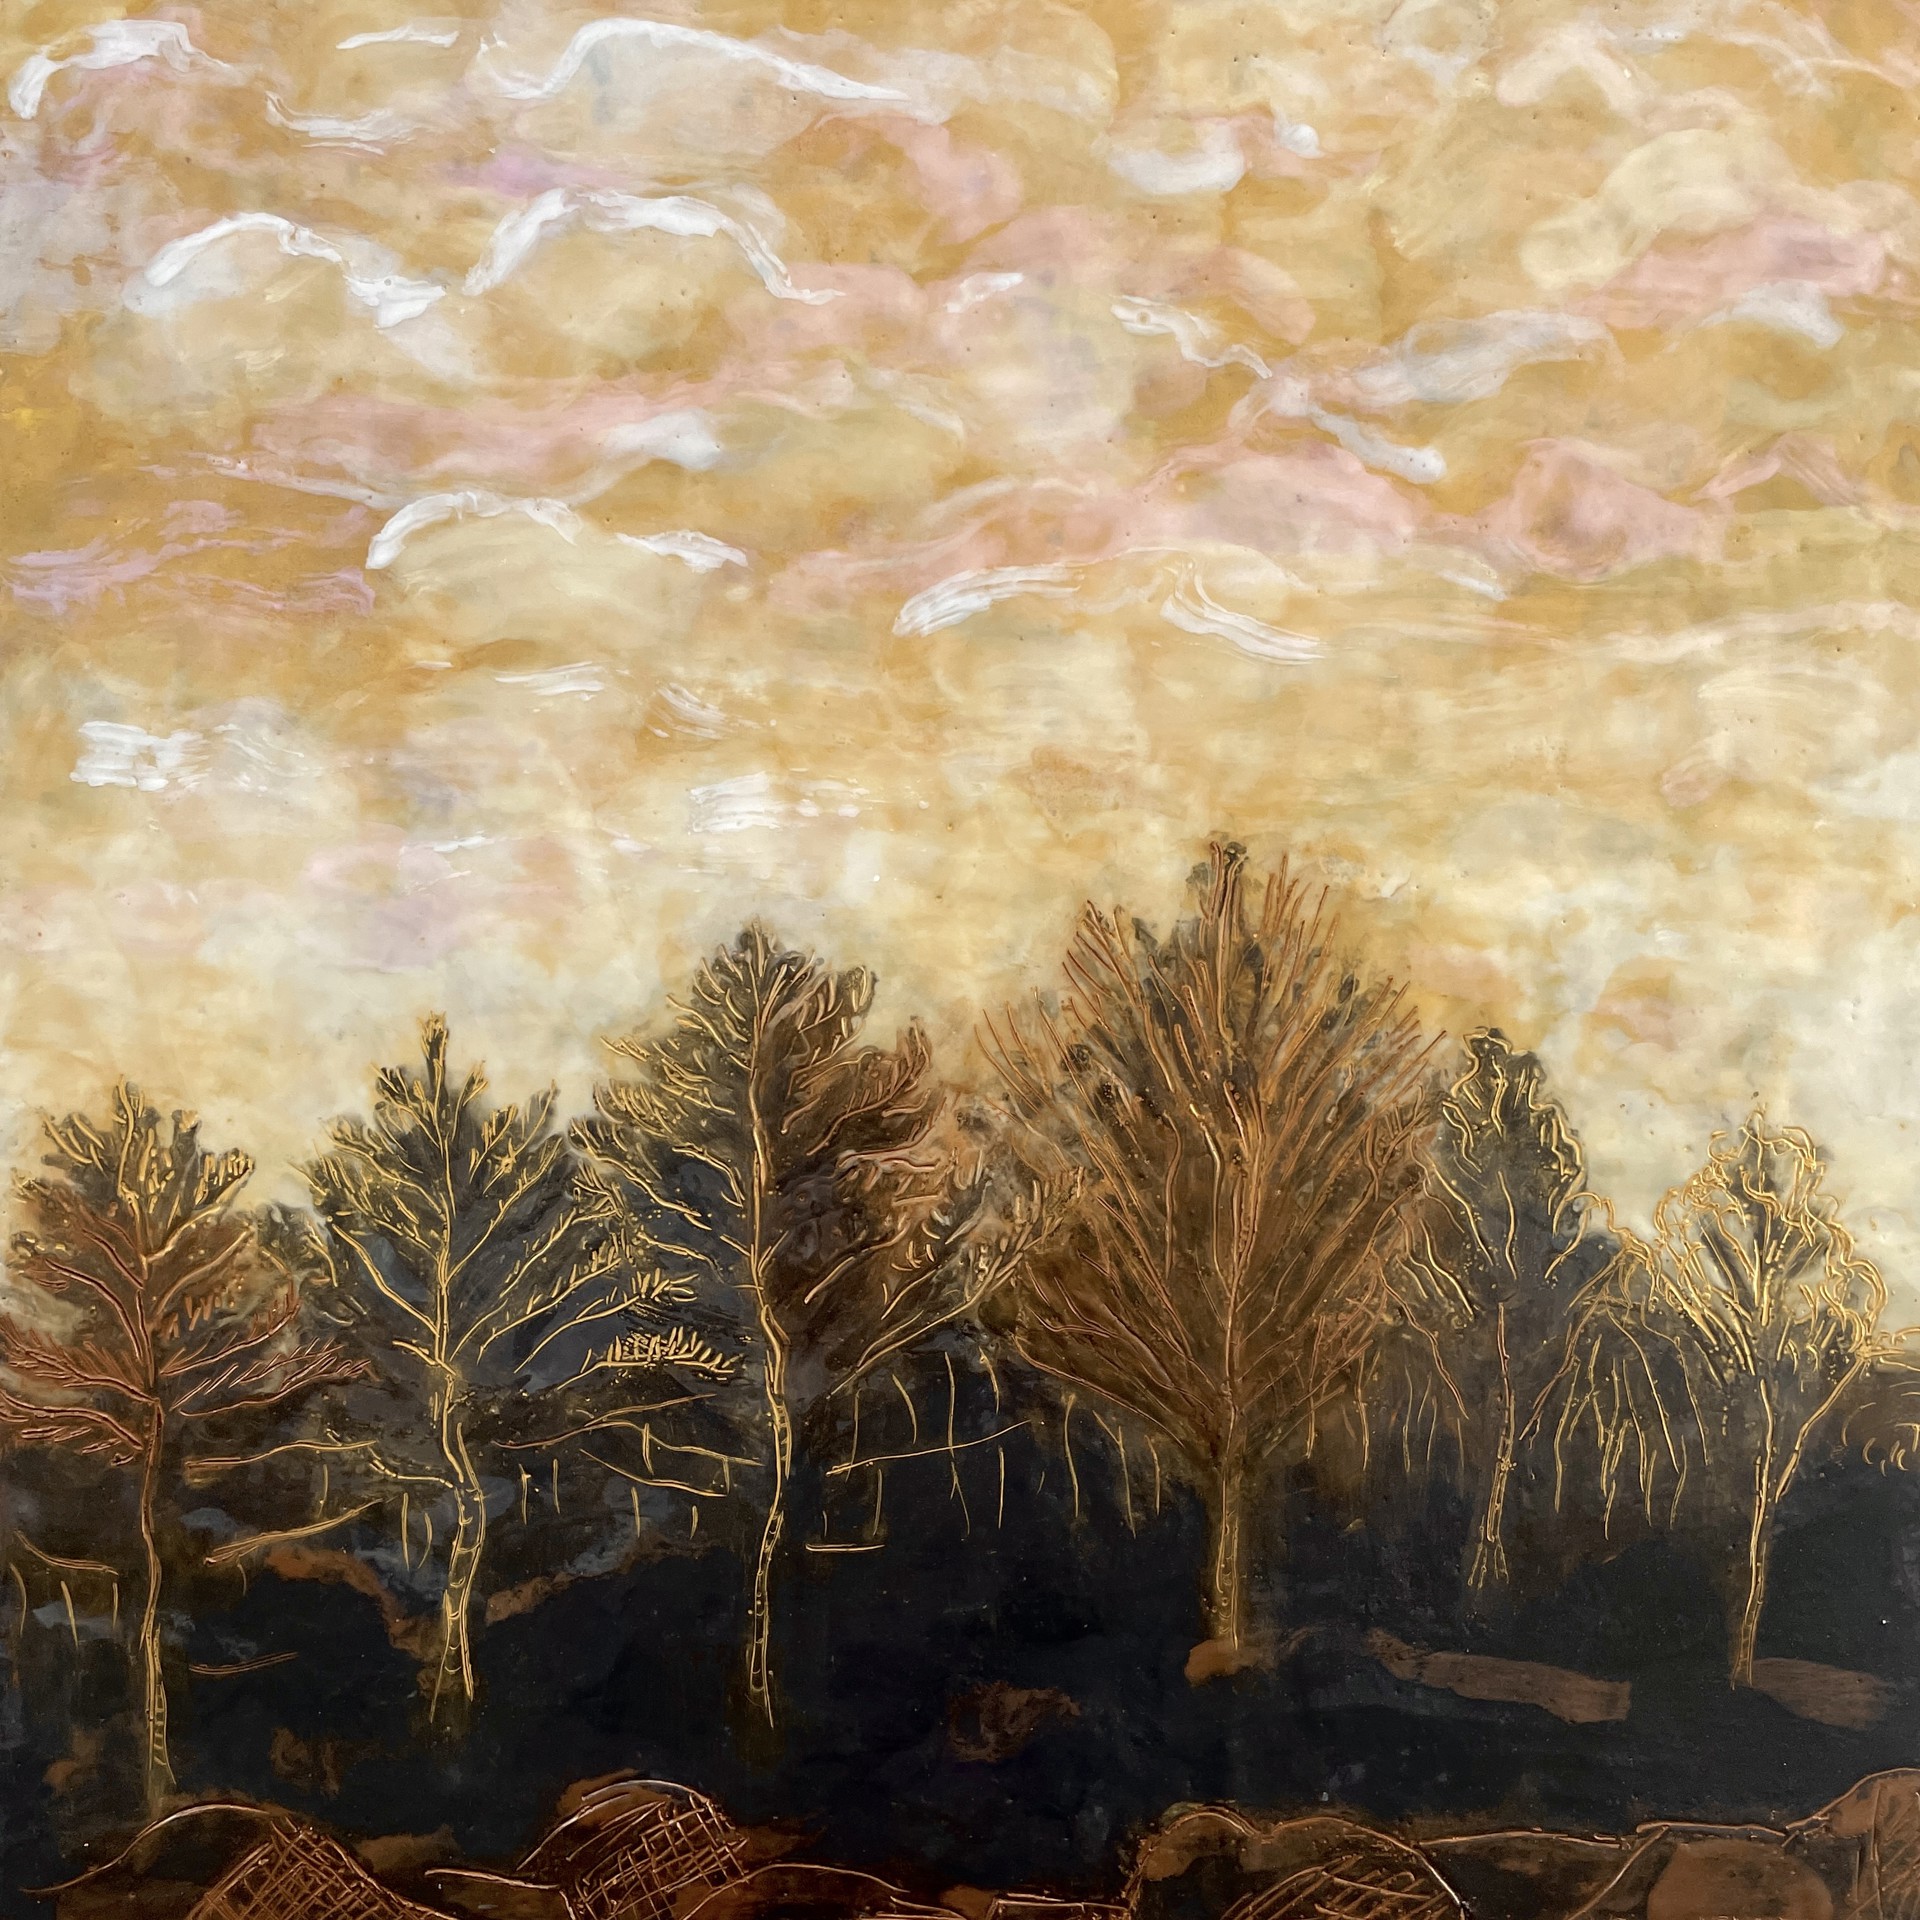 Spruce Tree Sky Line: A New Day by Willa Vennema